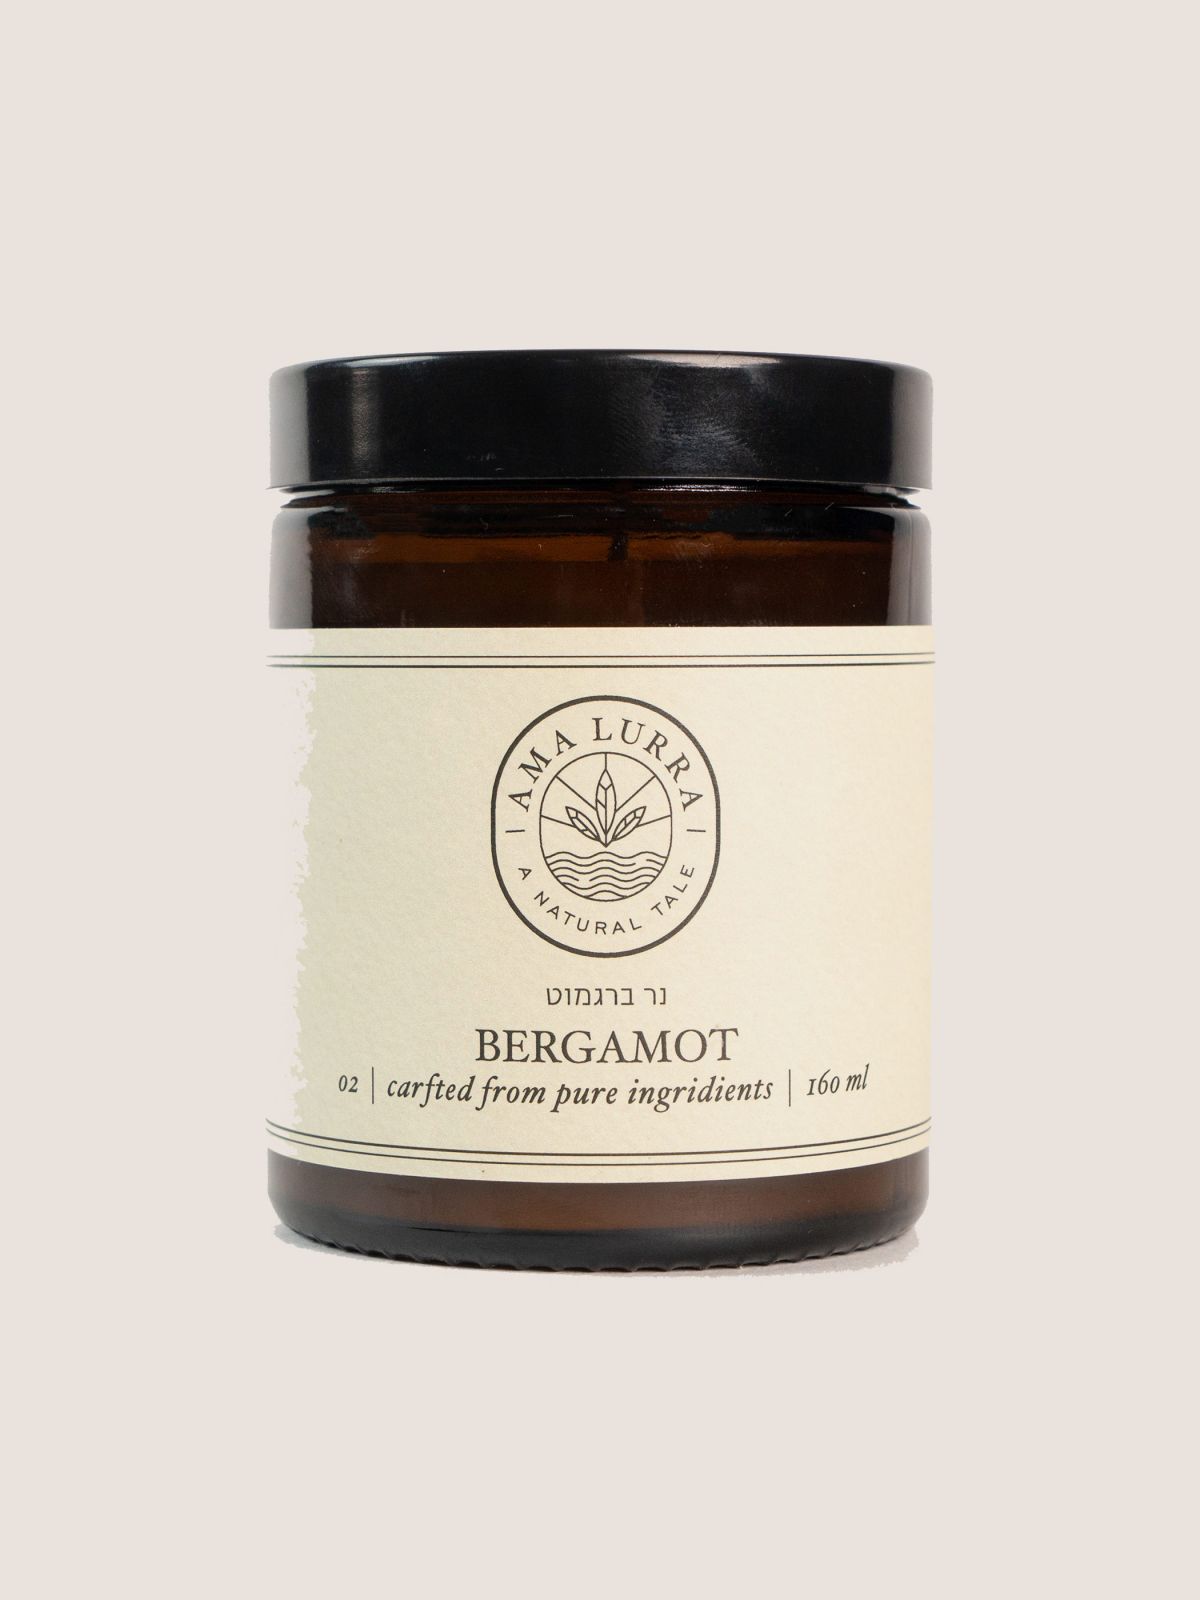  נר שמן טבעי בריח ברגמוט Natural oil candle with a bergamot scent של AMA LURRA